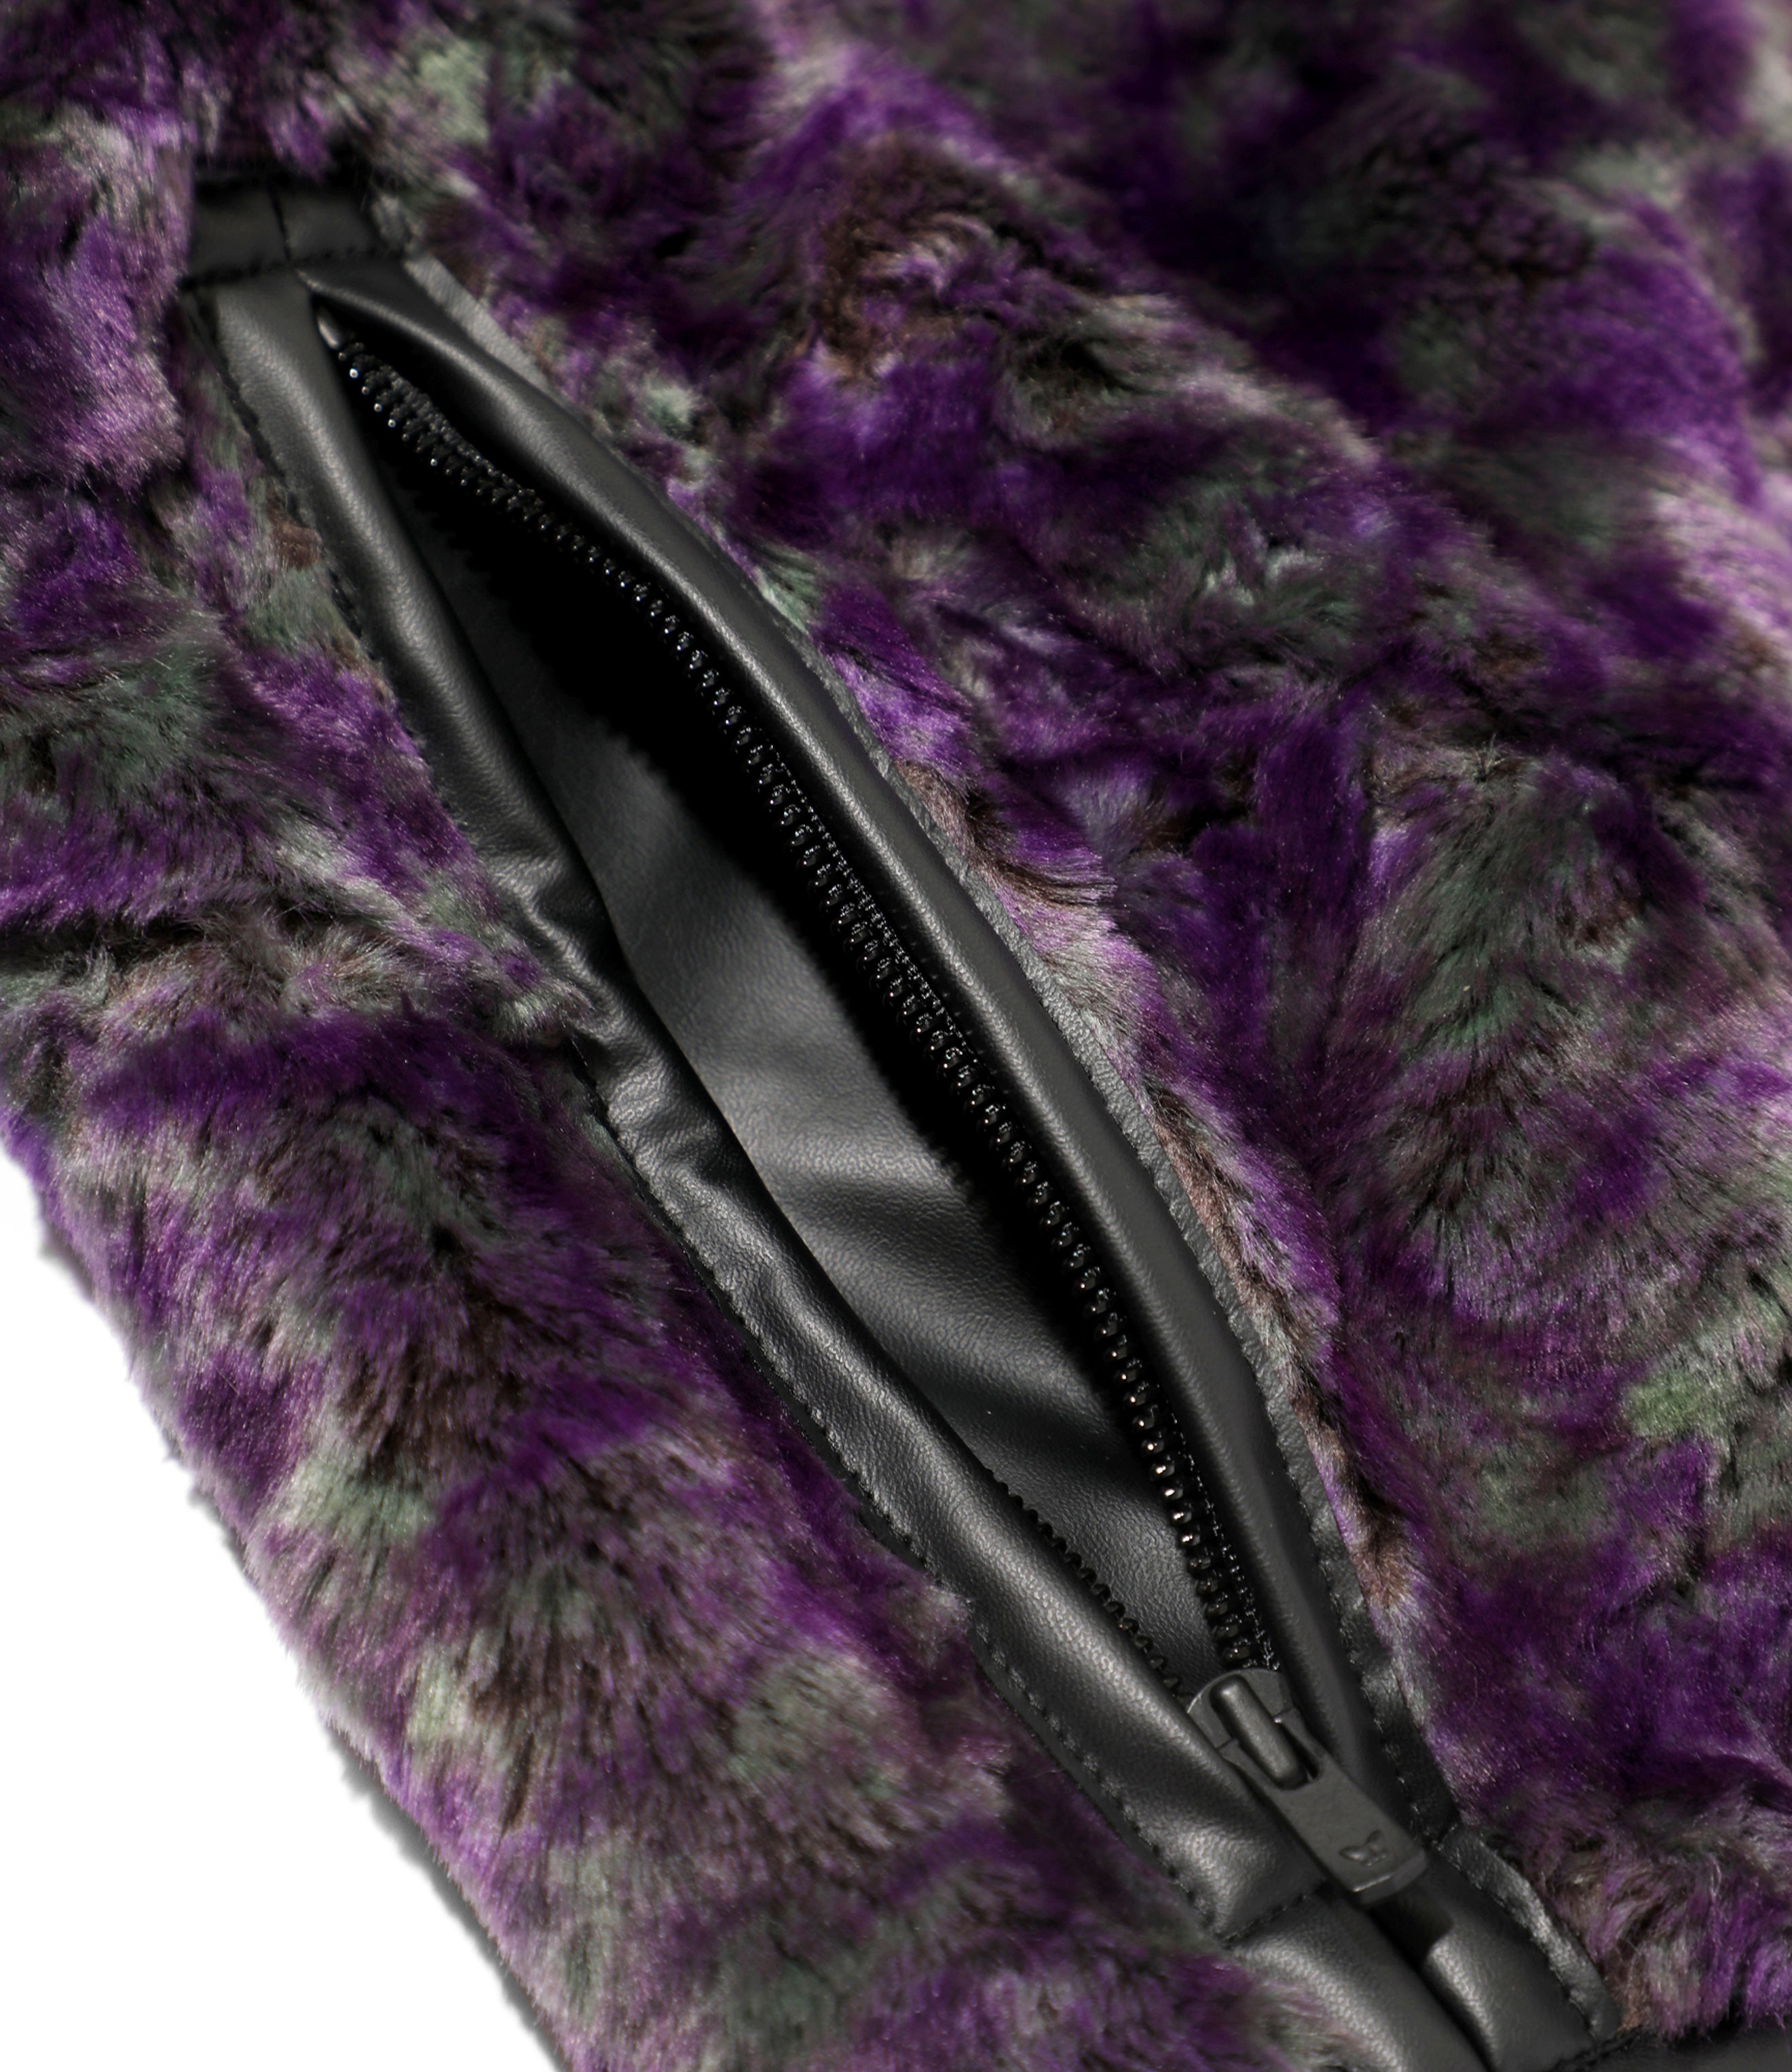 Fur Jacket - Purple/Green - Faux Fur / Uneven Printed